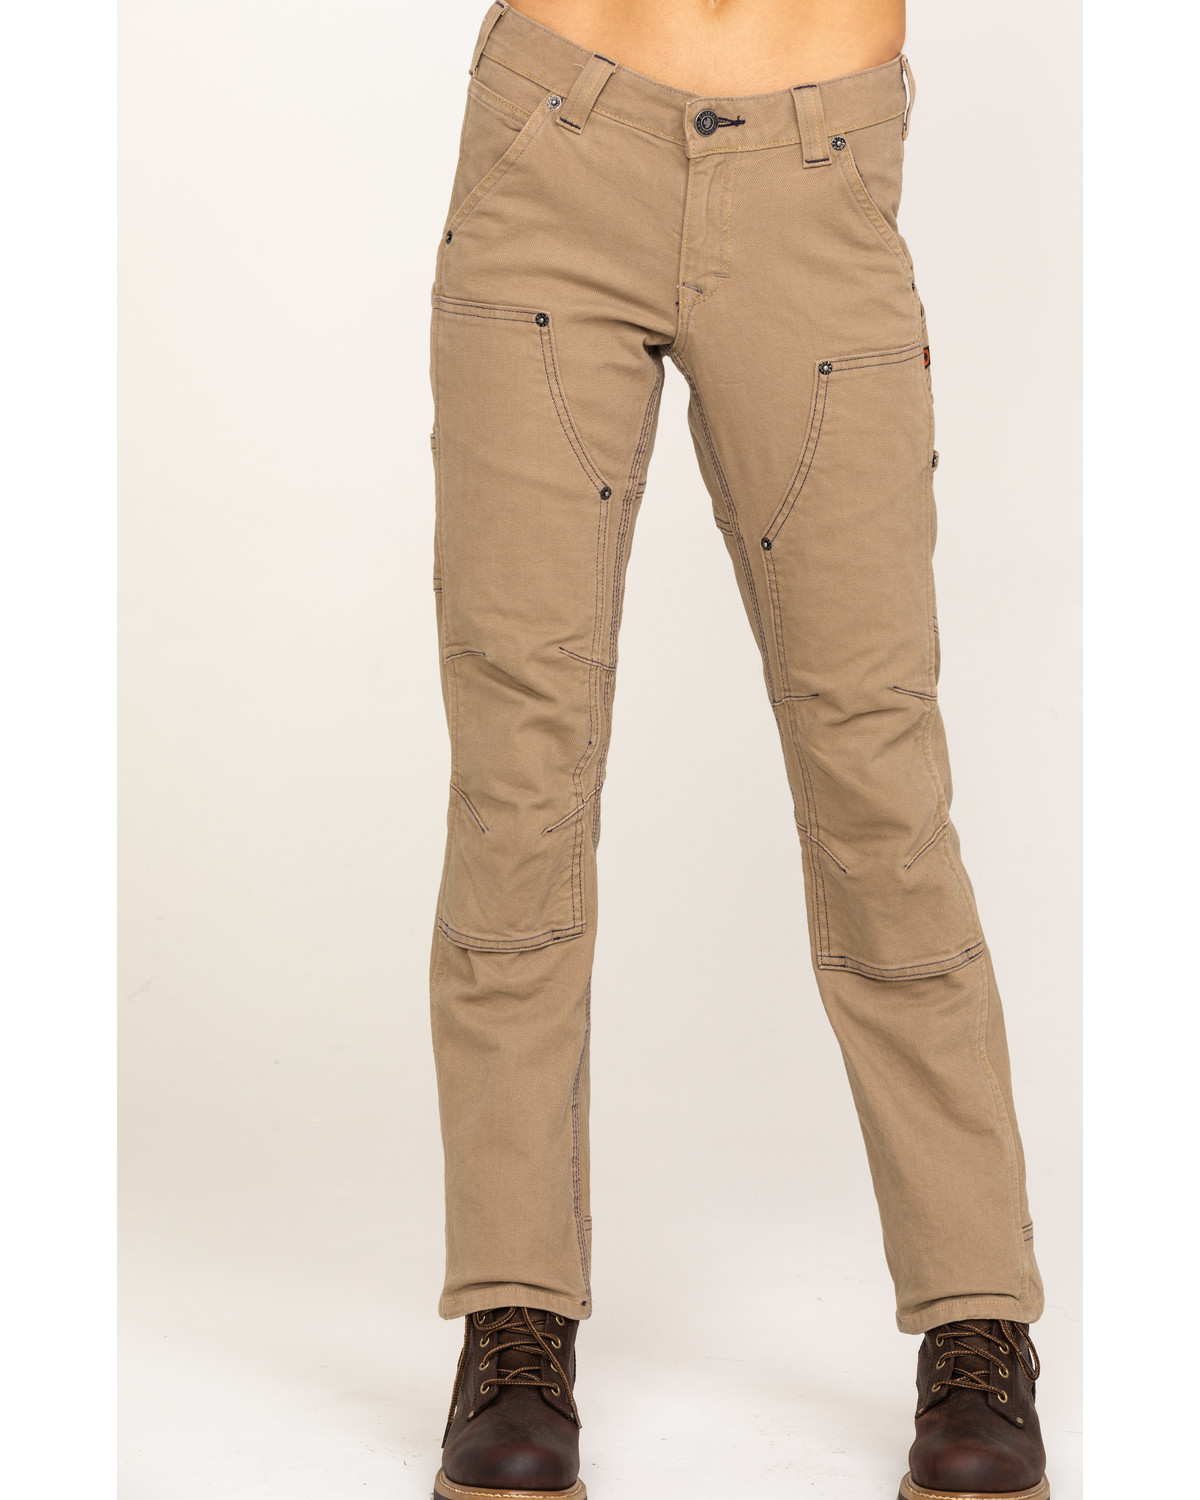 Size 6 Indigo Denim 34 Length Dovetail Workwear Utility Pants for Women Britt Utility Straight Fit Stretch Cargo Pant